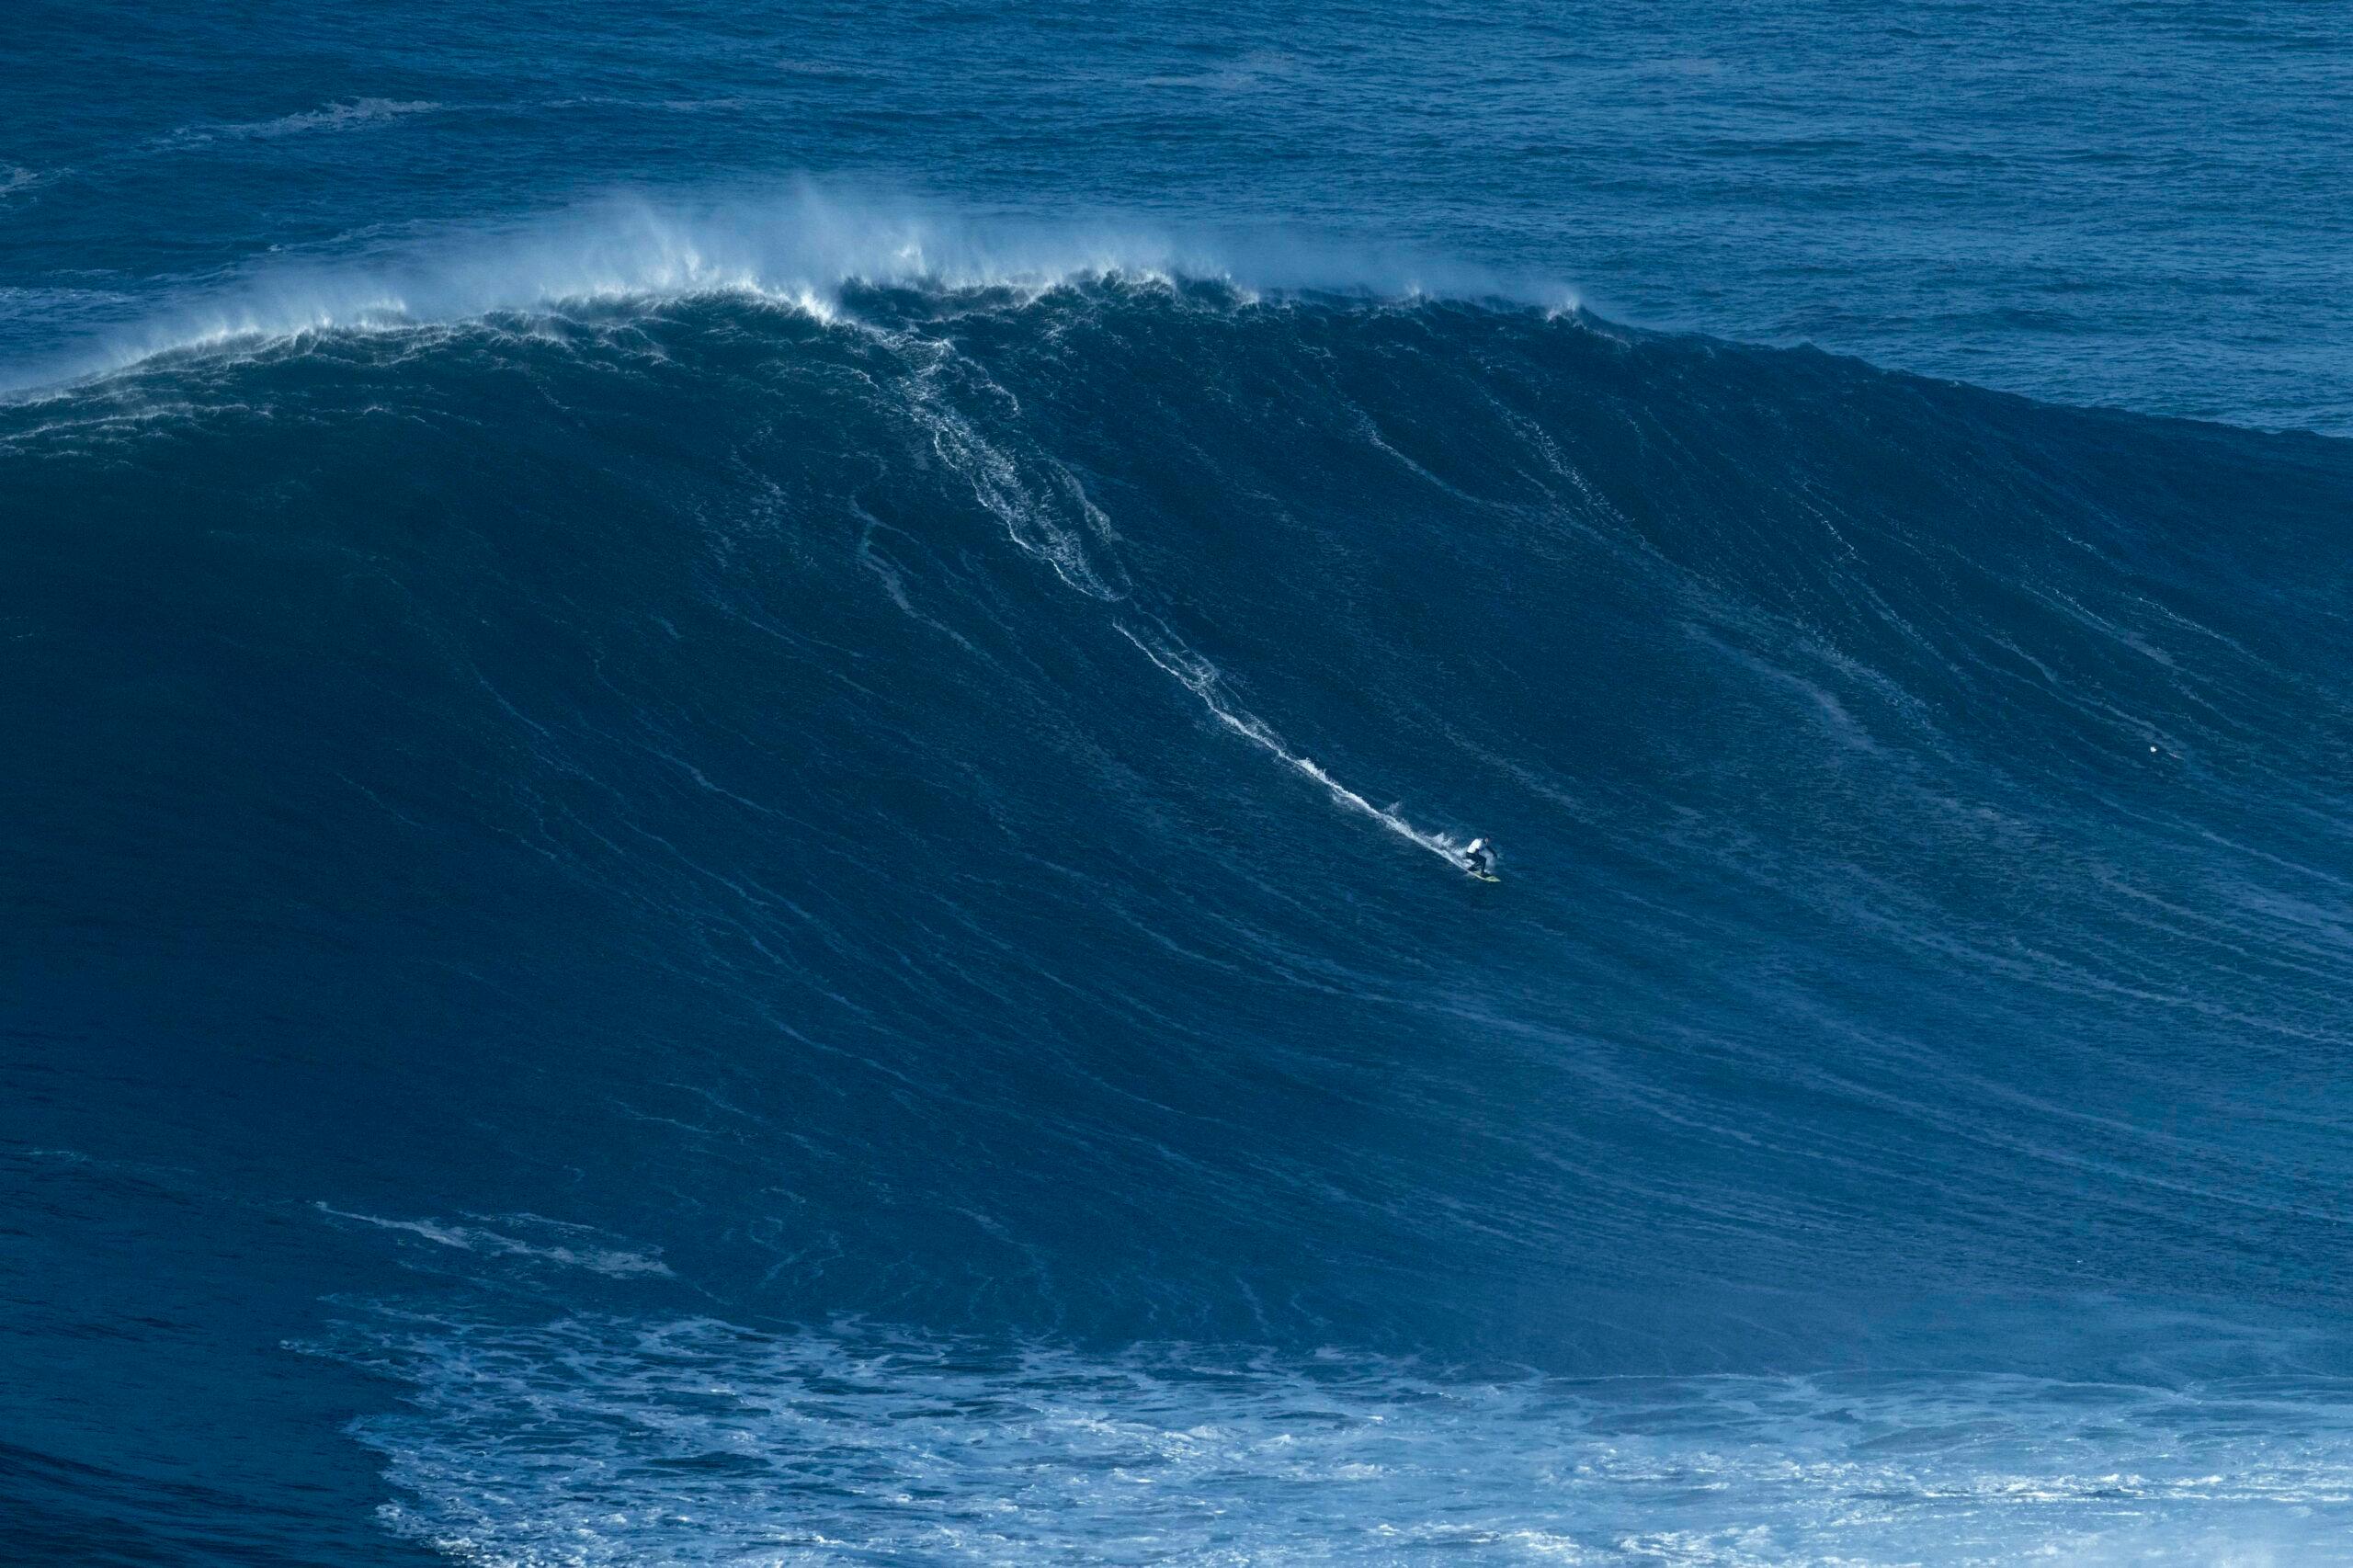 Big wave surfing in Nazare, Portugal - 08 Jan 2022